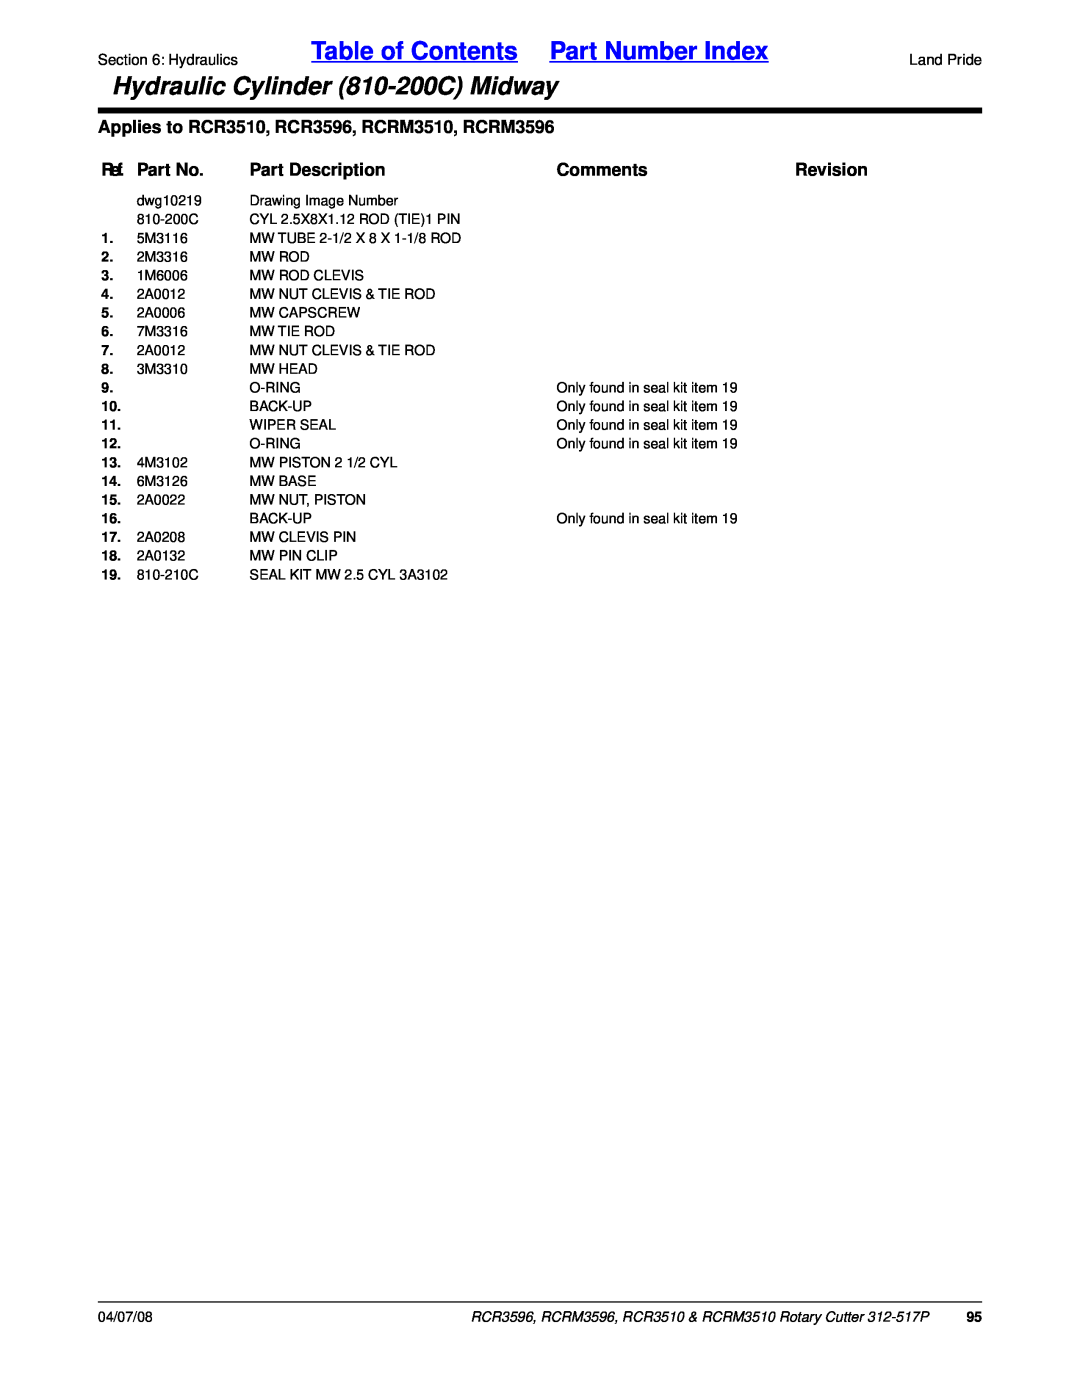 Land Pride RCR3596 Table of Contents Part Number Index, Hydraulic Cylinder 810-200CMidway, Ref. Part No, Part Description 